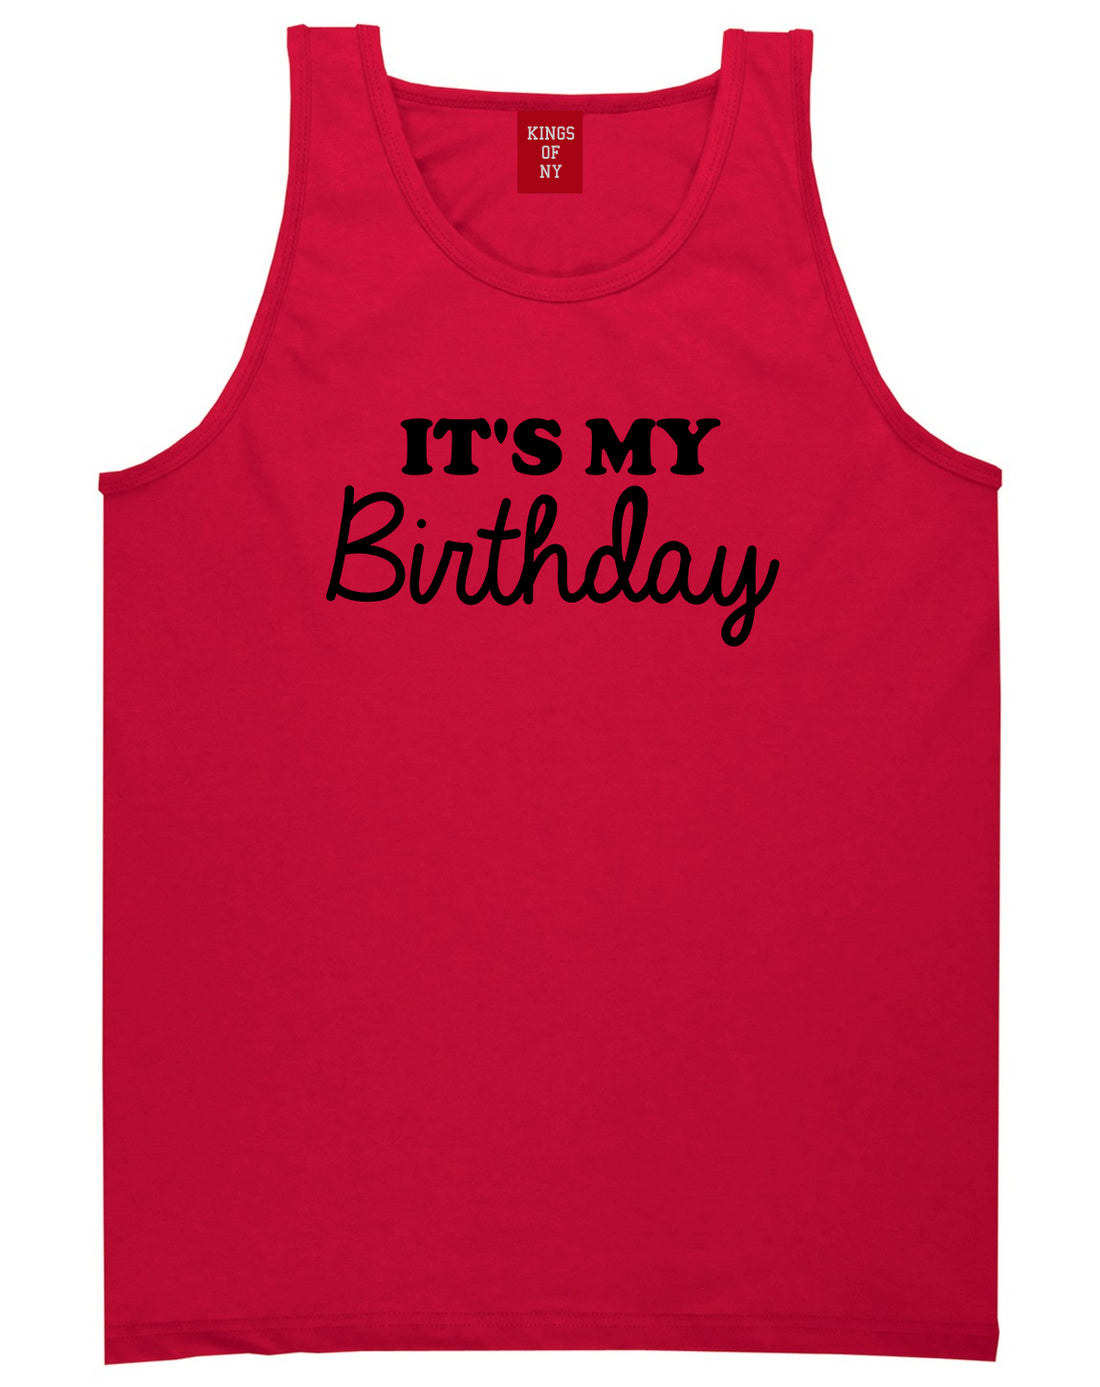 Its My Birthday Mens Tank Top T-Shirt Red